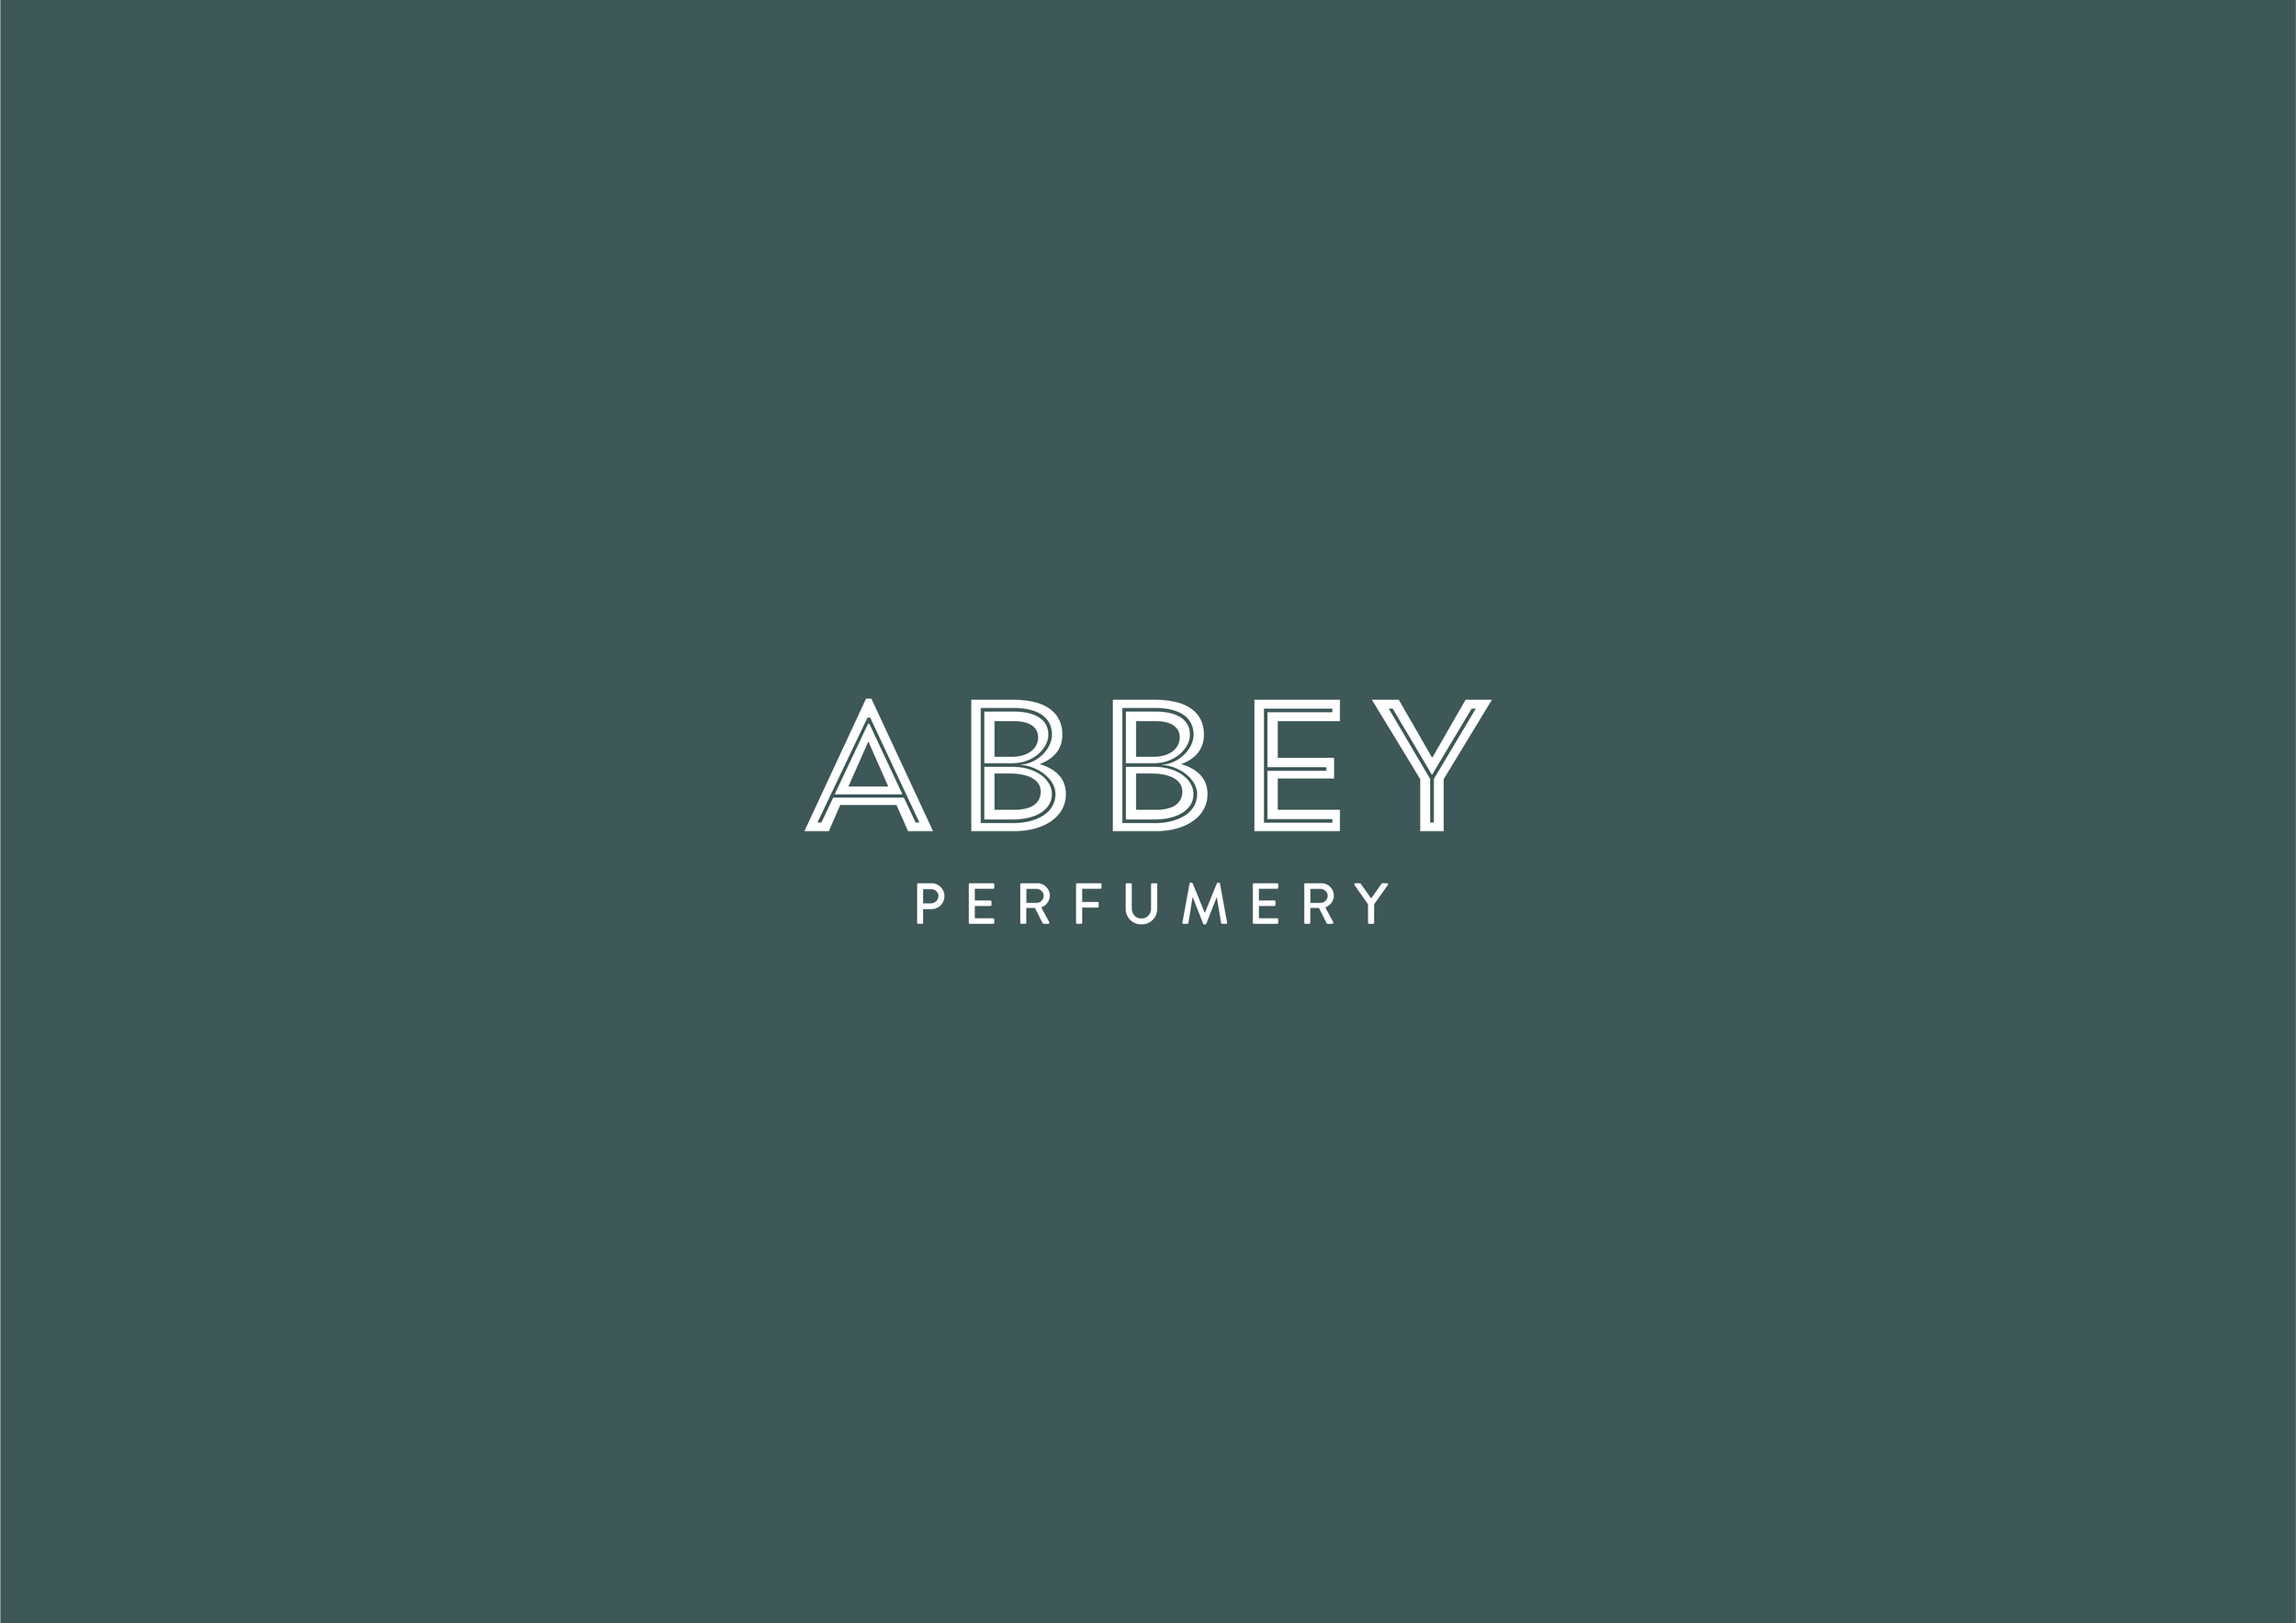 Abbey perfume logo design - simple logo on green background